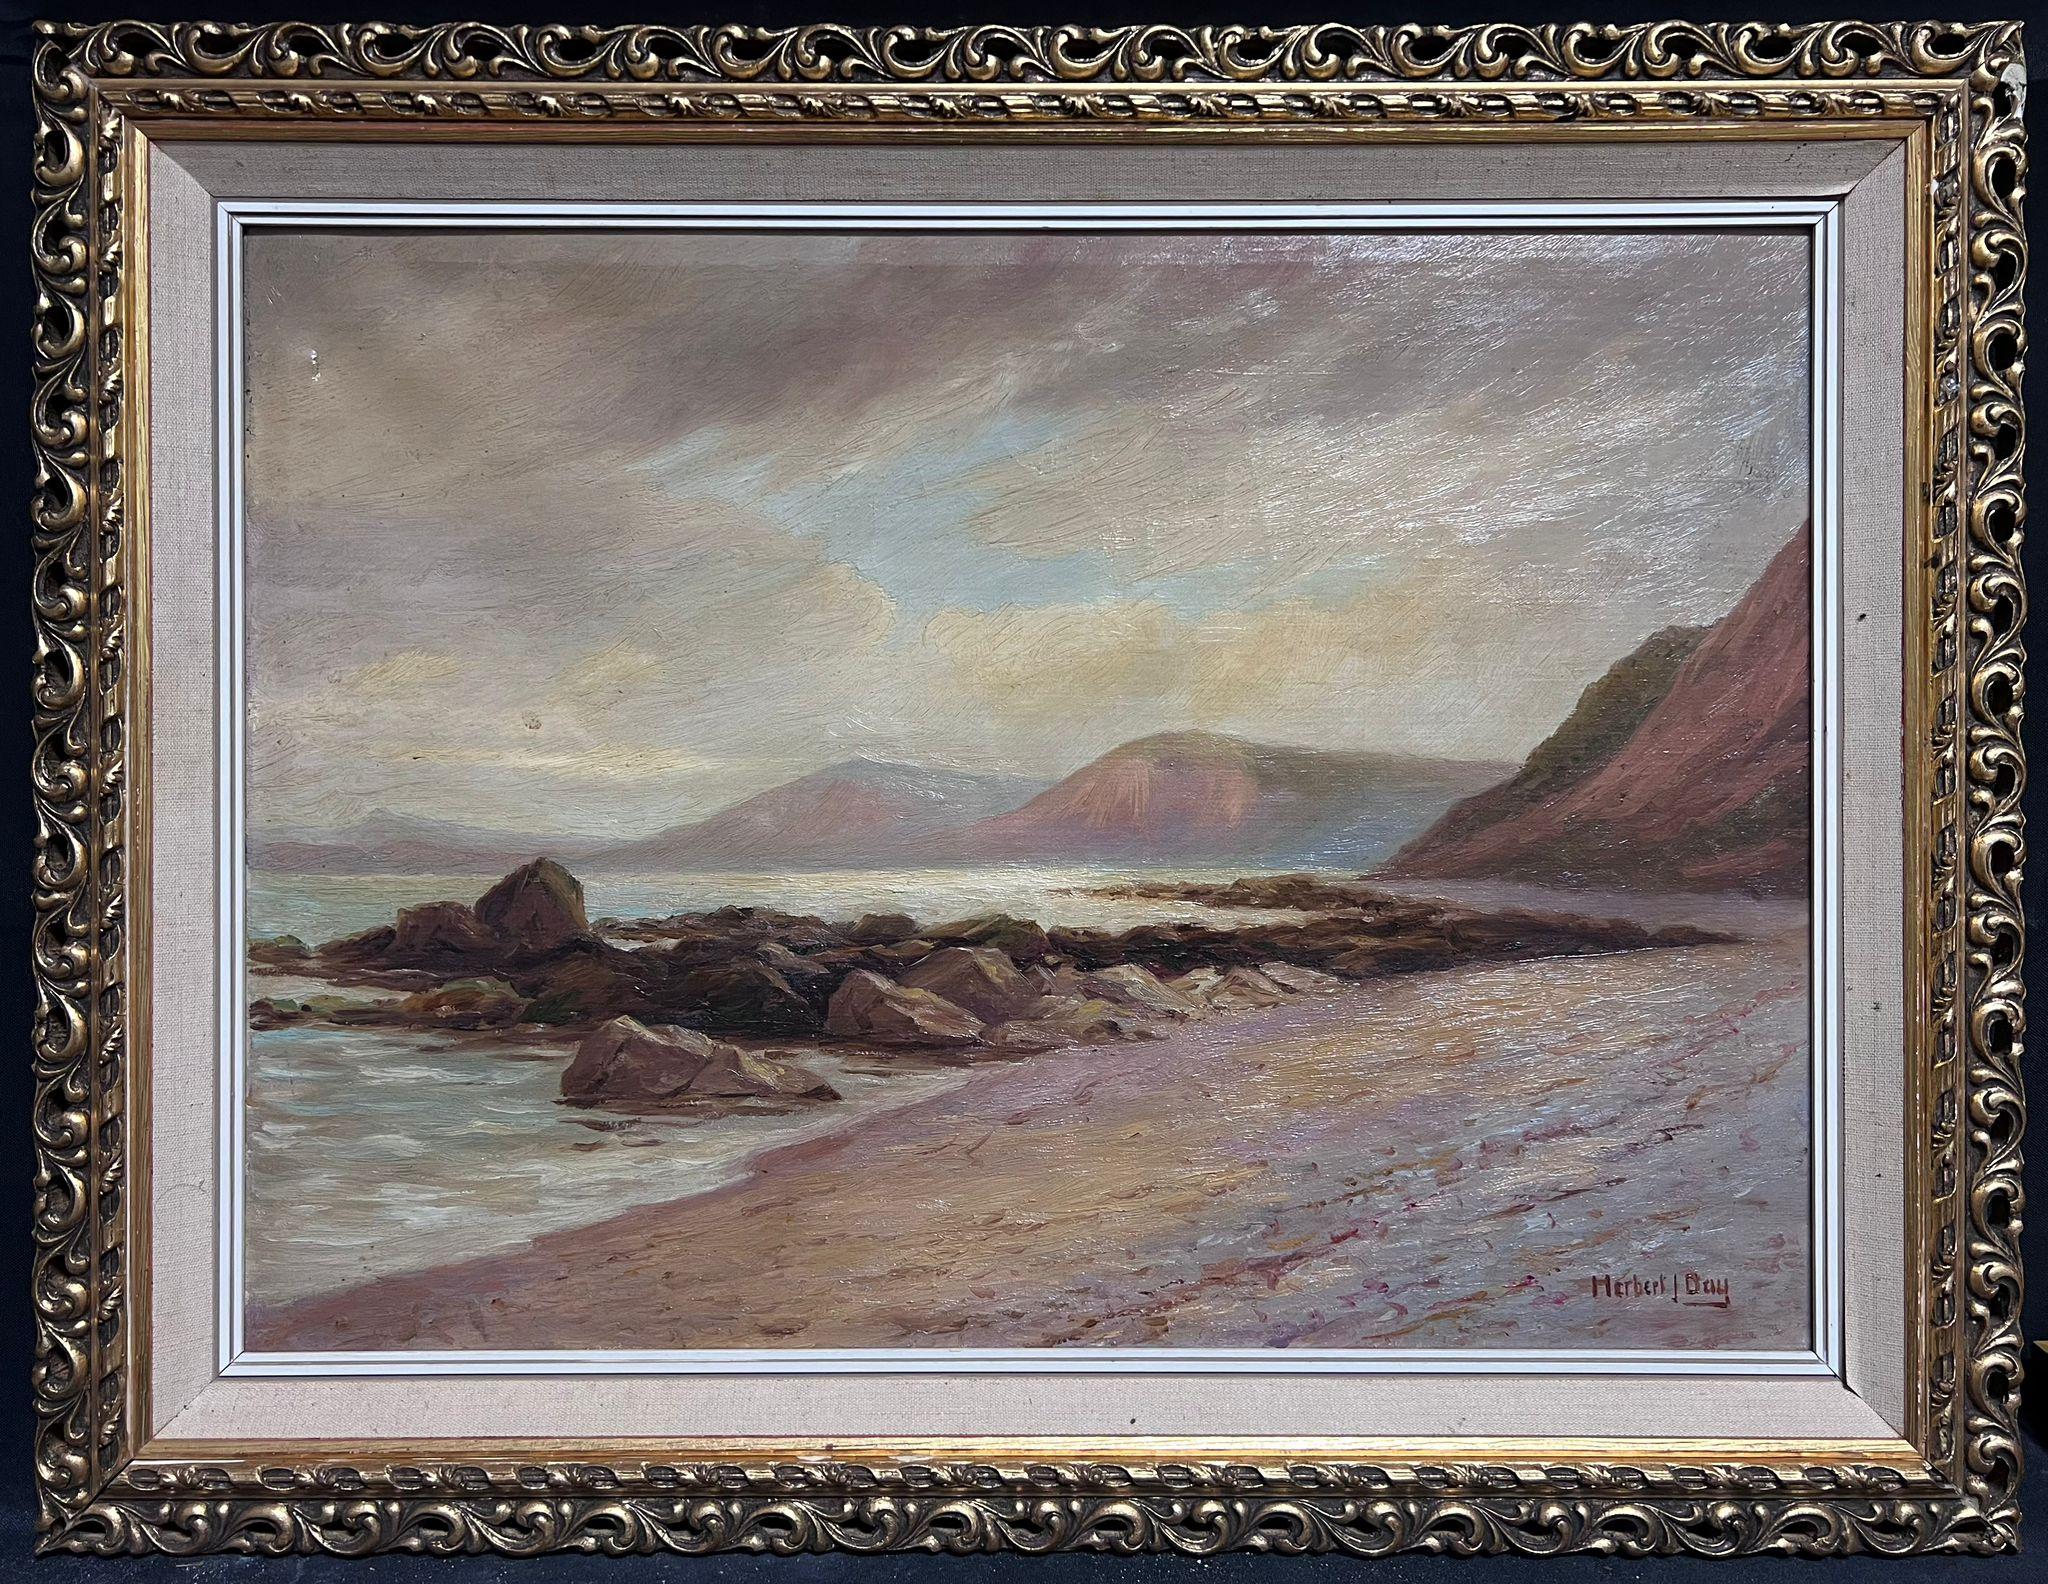 Herbert J. Day Landscape Painting - Antique American Signed Oil Painting Coastal Landscape Beach Scene & Cliffs